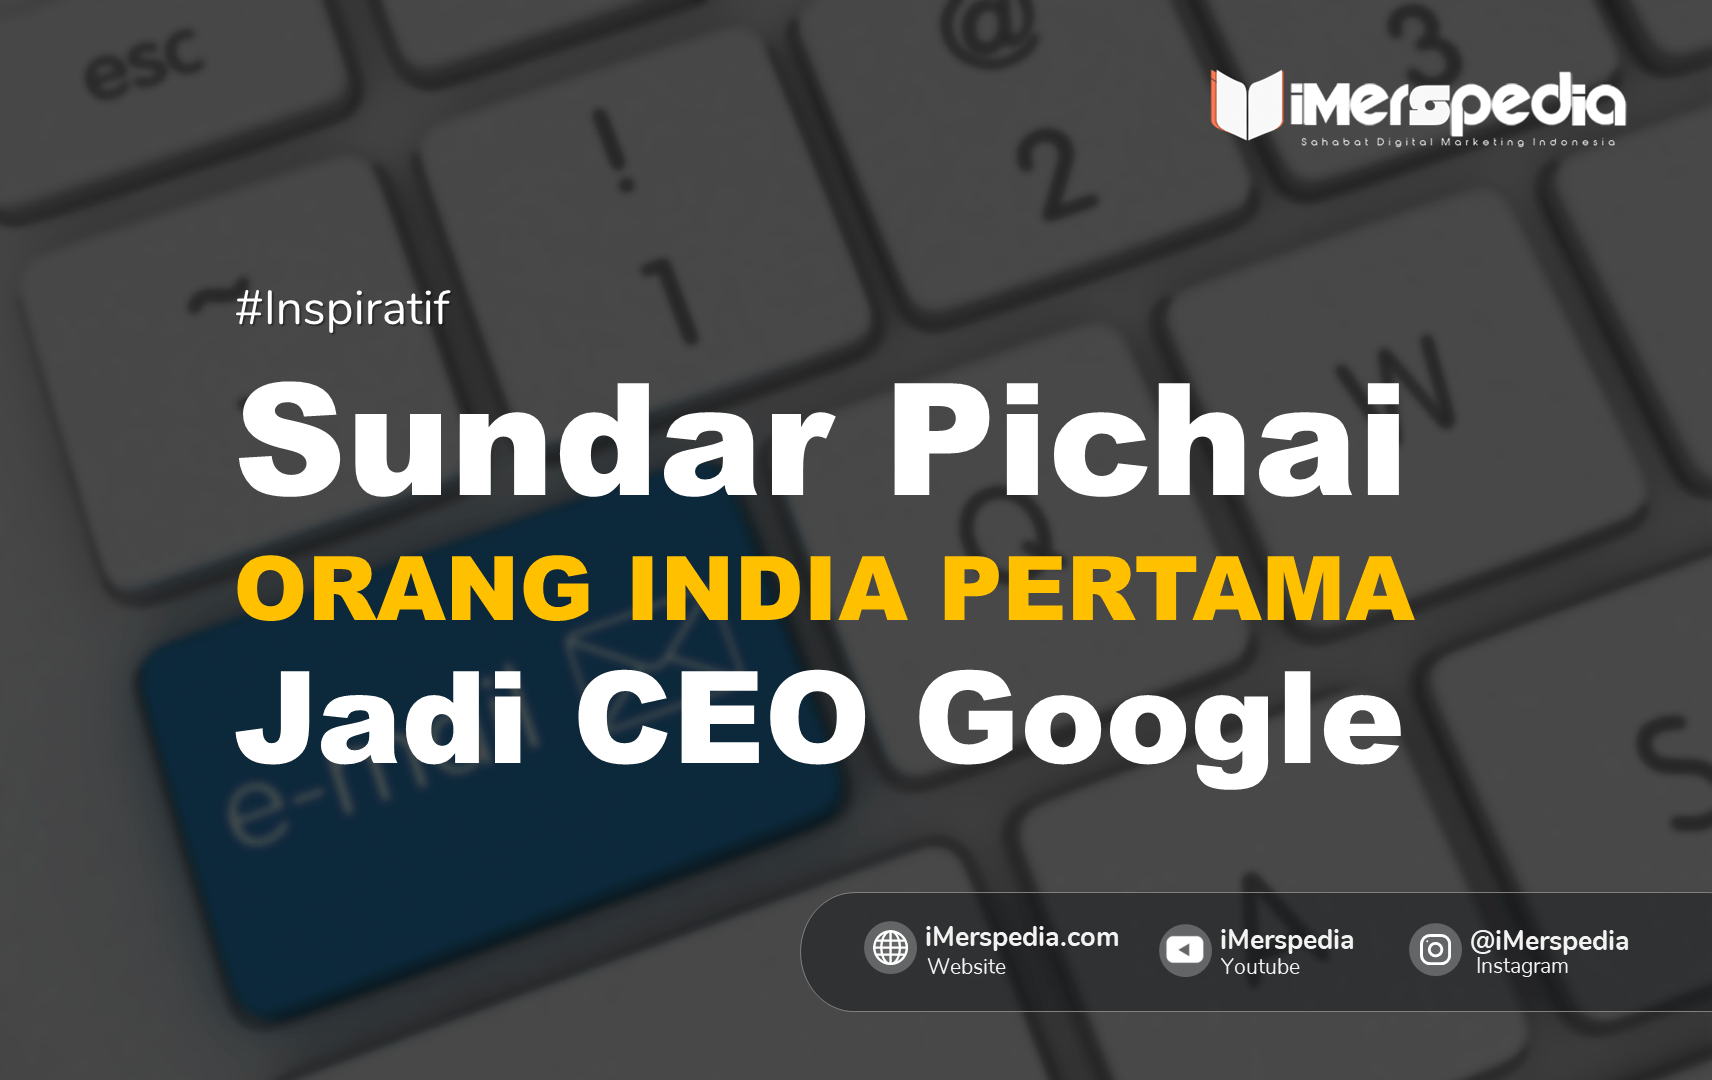 Kisah orang india pertama jadi CEO Google